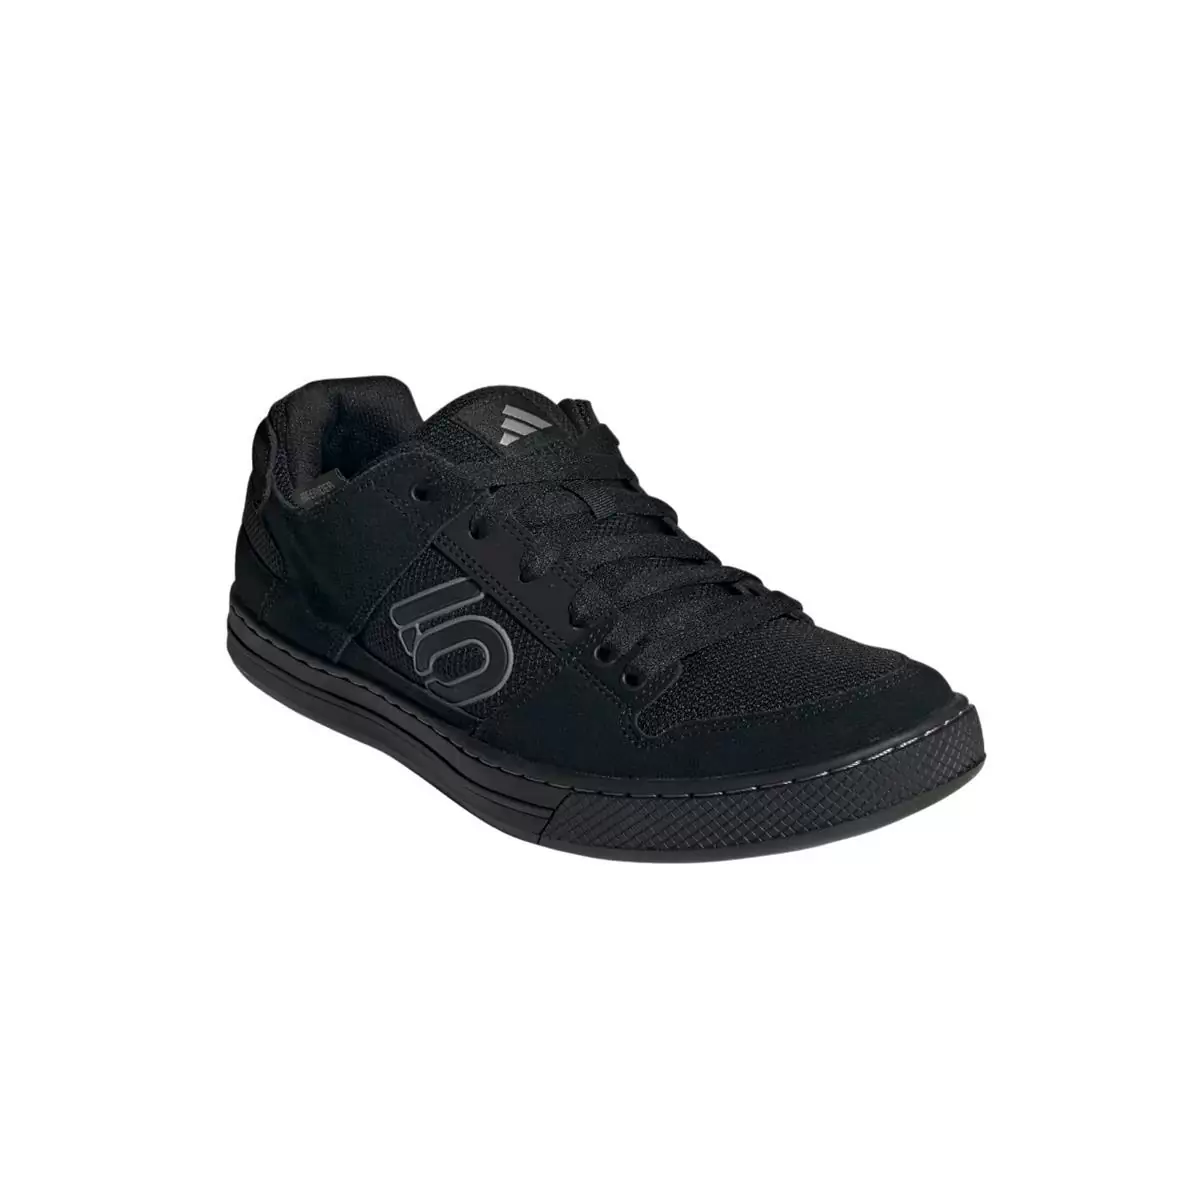 MTB Shoes Flat Freerider Black Size 44 #4